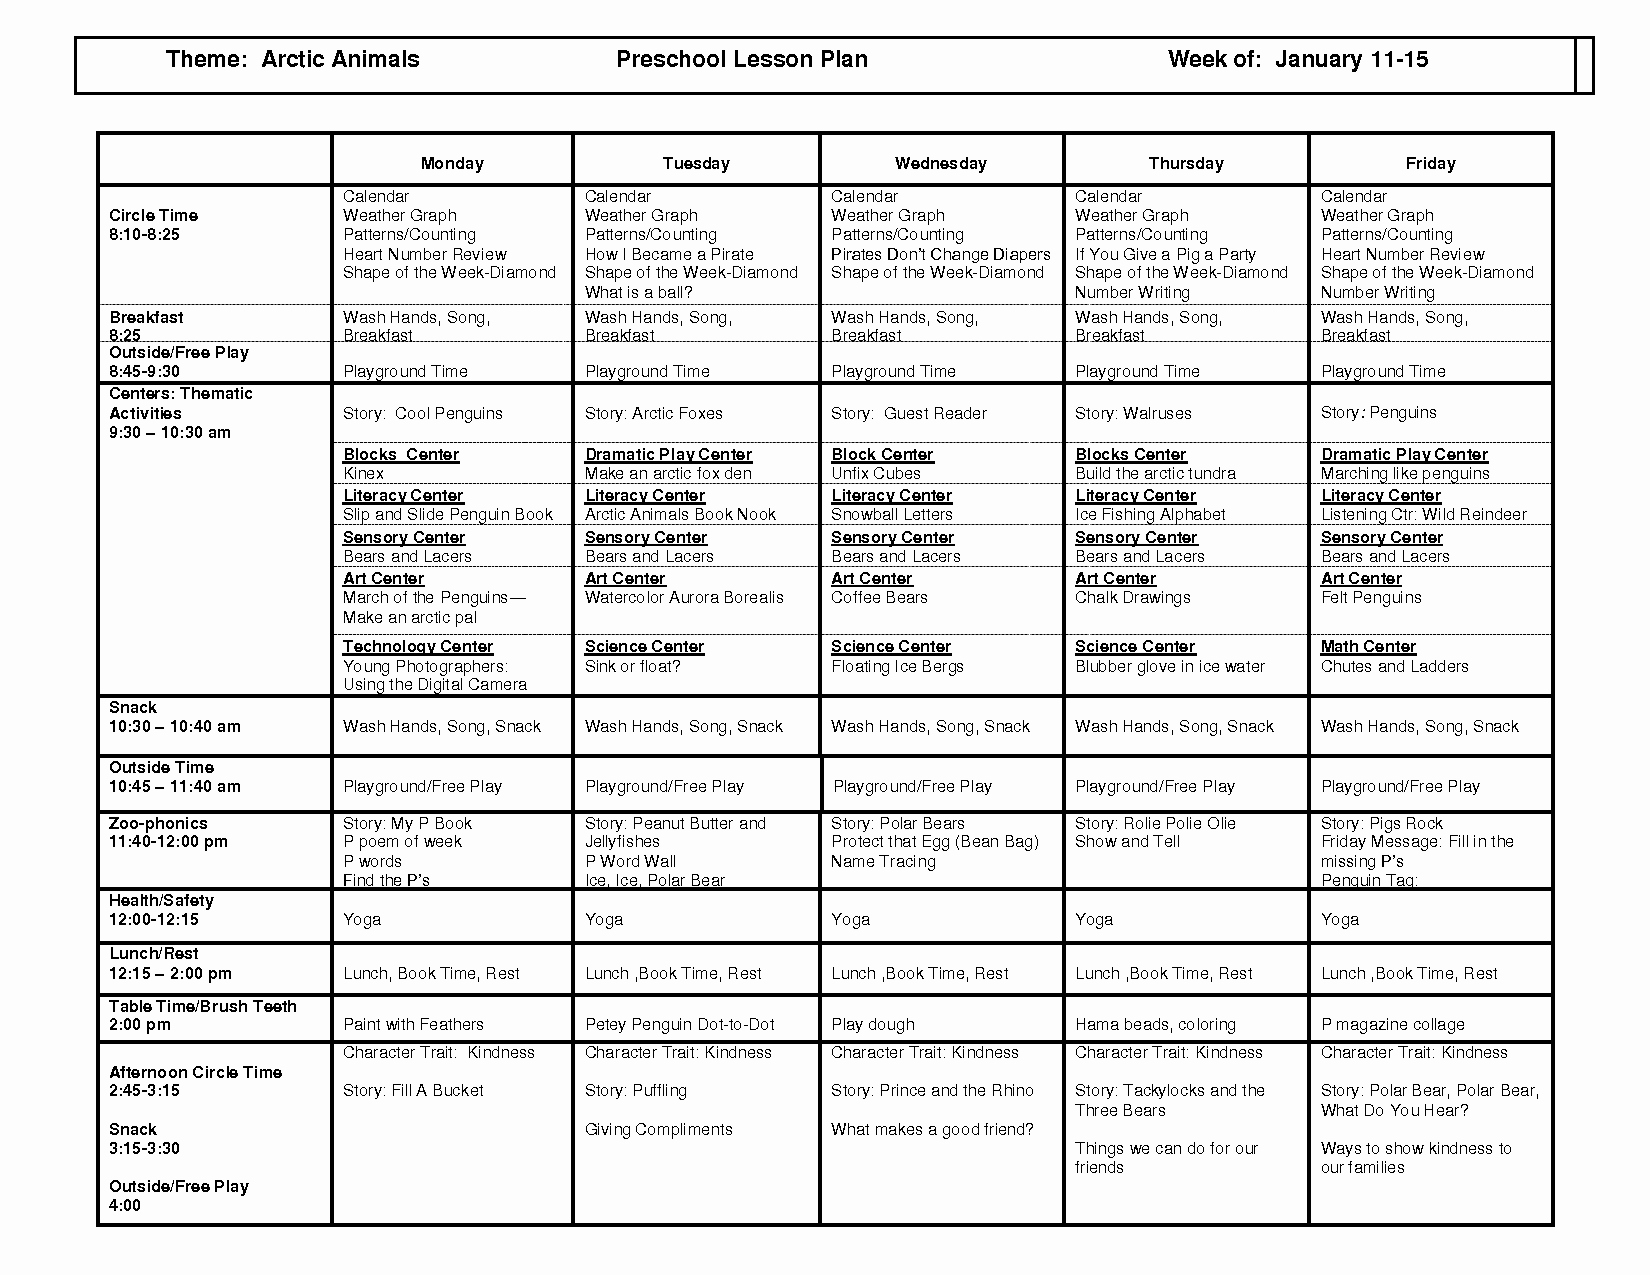 Preschool Weekly Lesson Plan Template Beautiful Free Weekly Lesson Plan Template and Teacher Resources